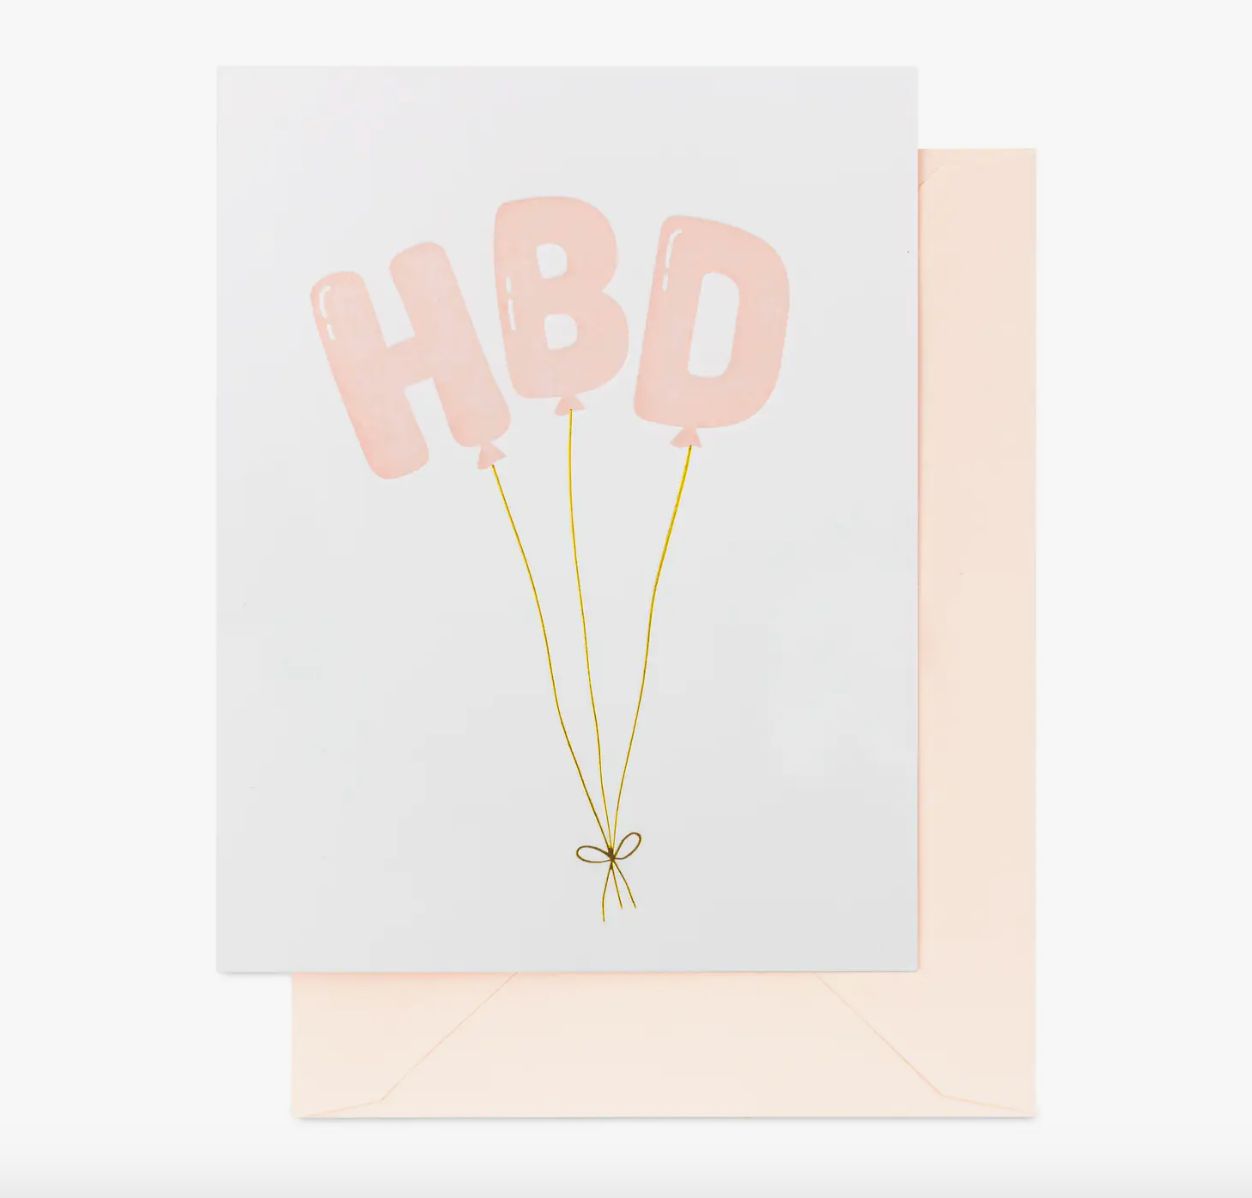 HBD Balloons Greeting Card